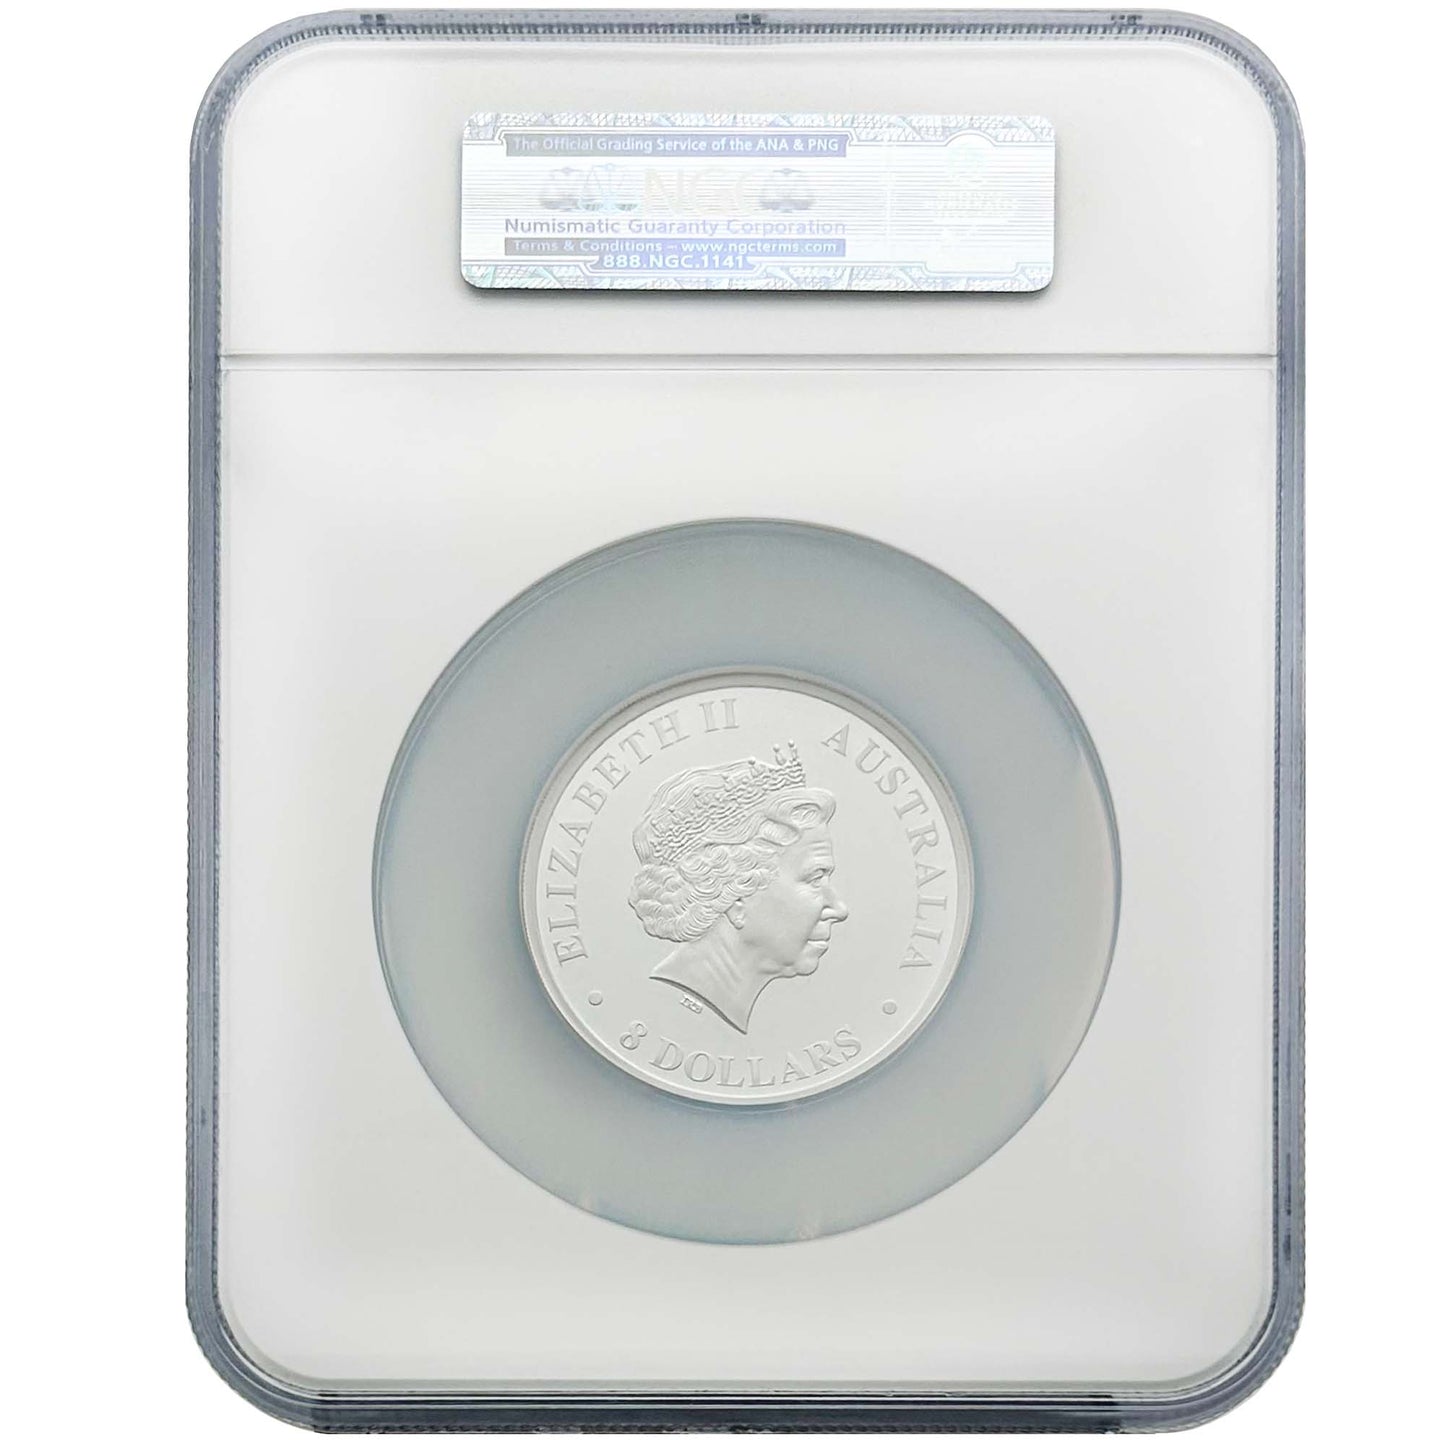 2011P Australia S$8 PF 70 Coin Graded NGC